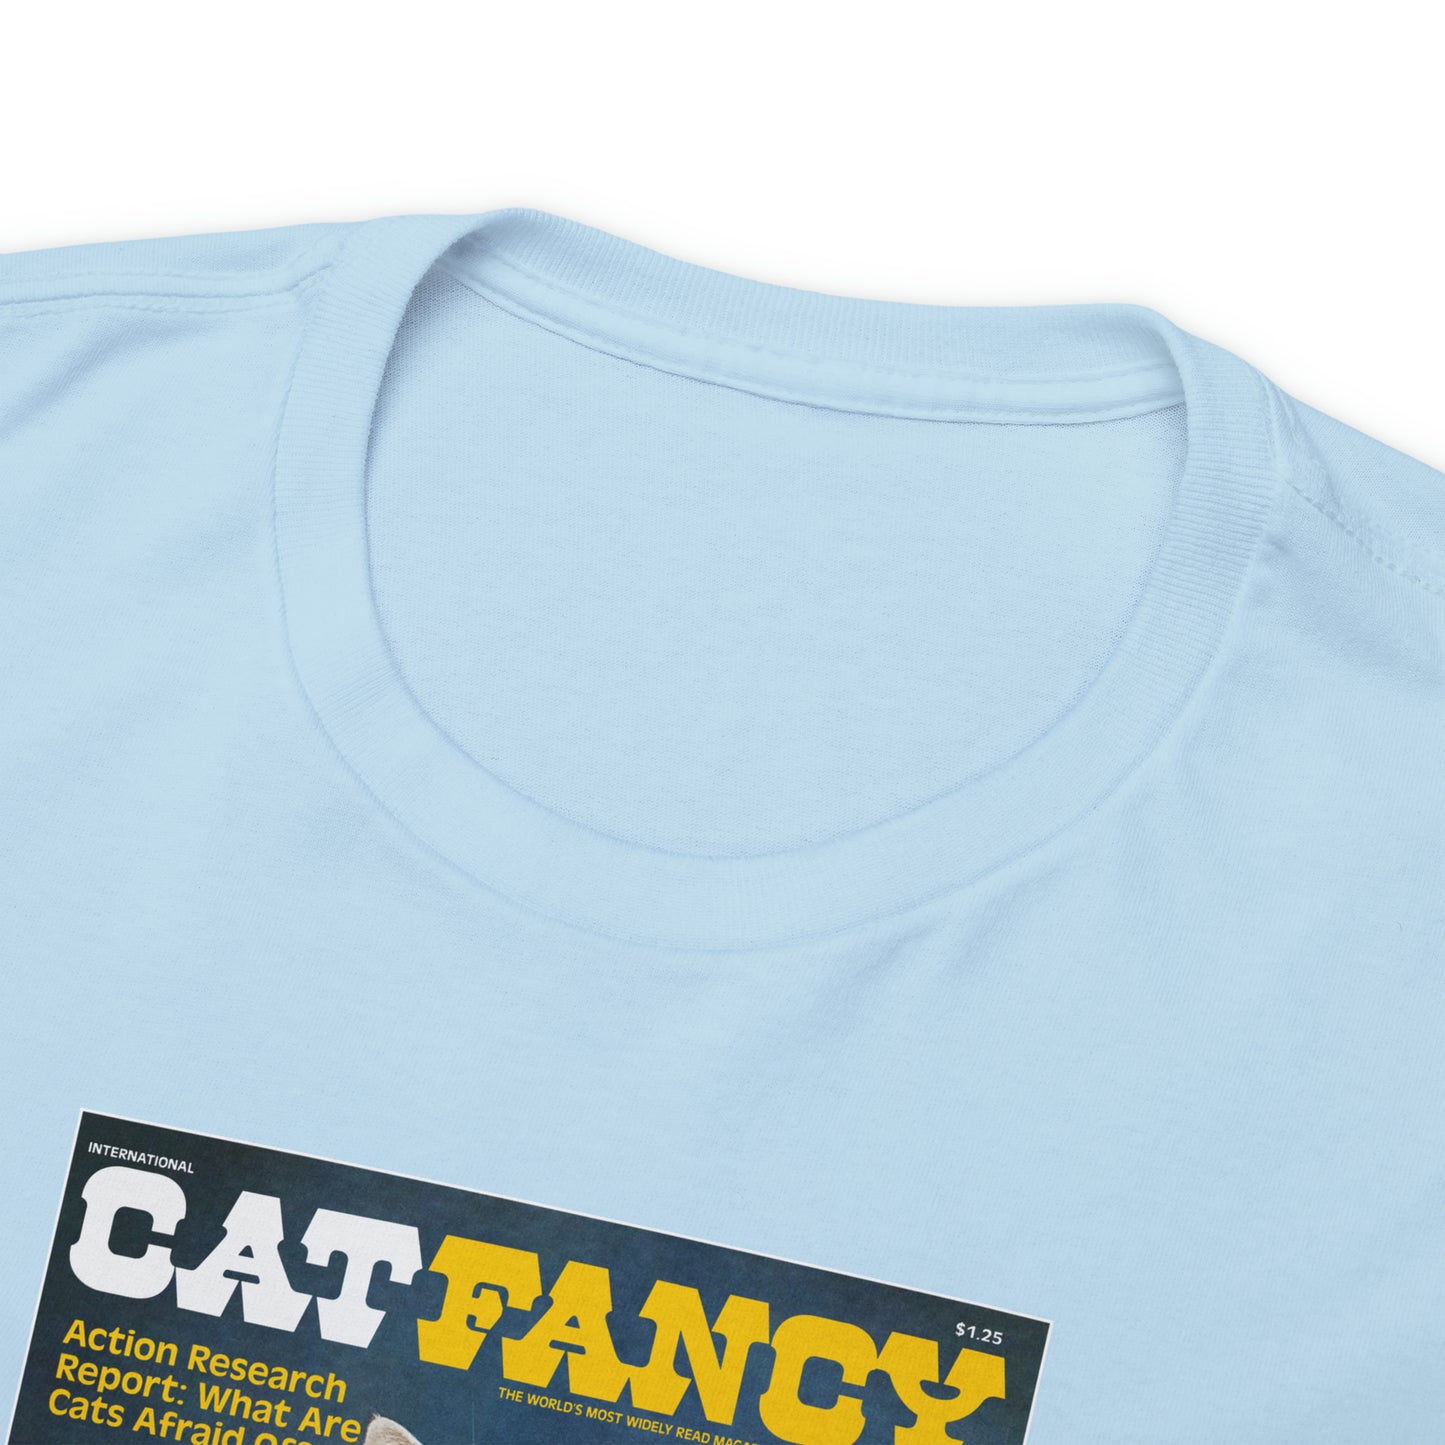 Cat Fancy T-Shirt